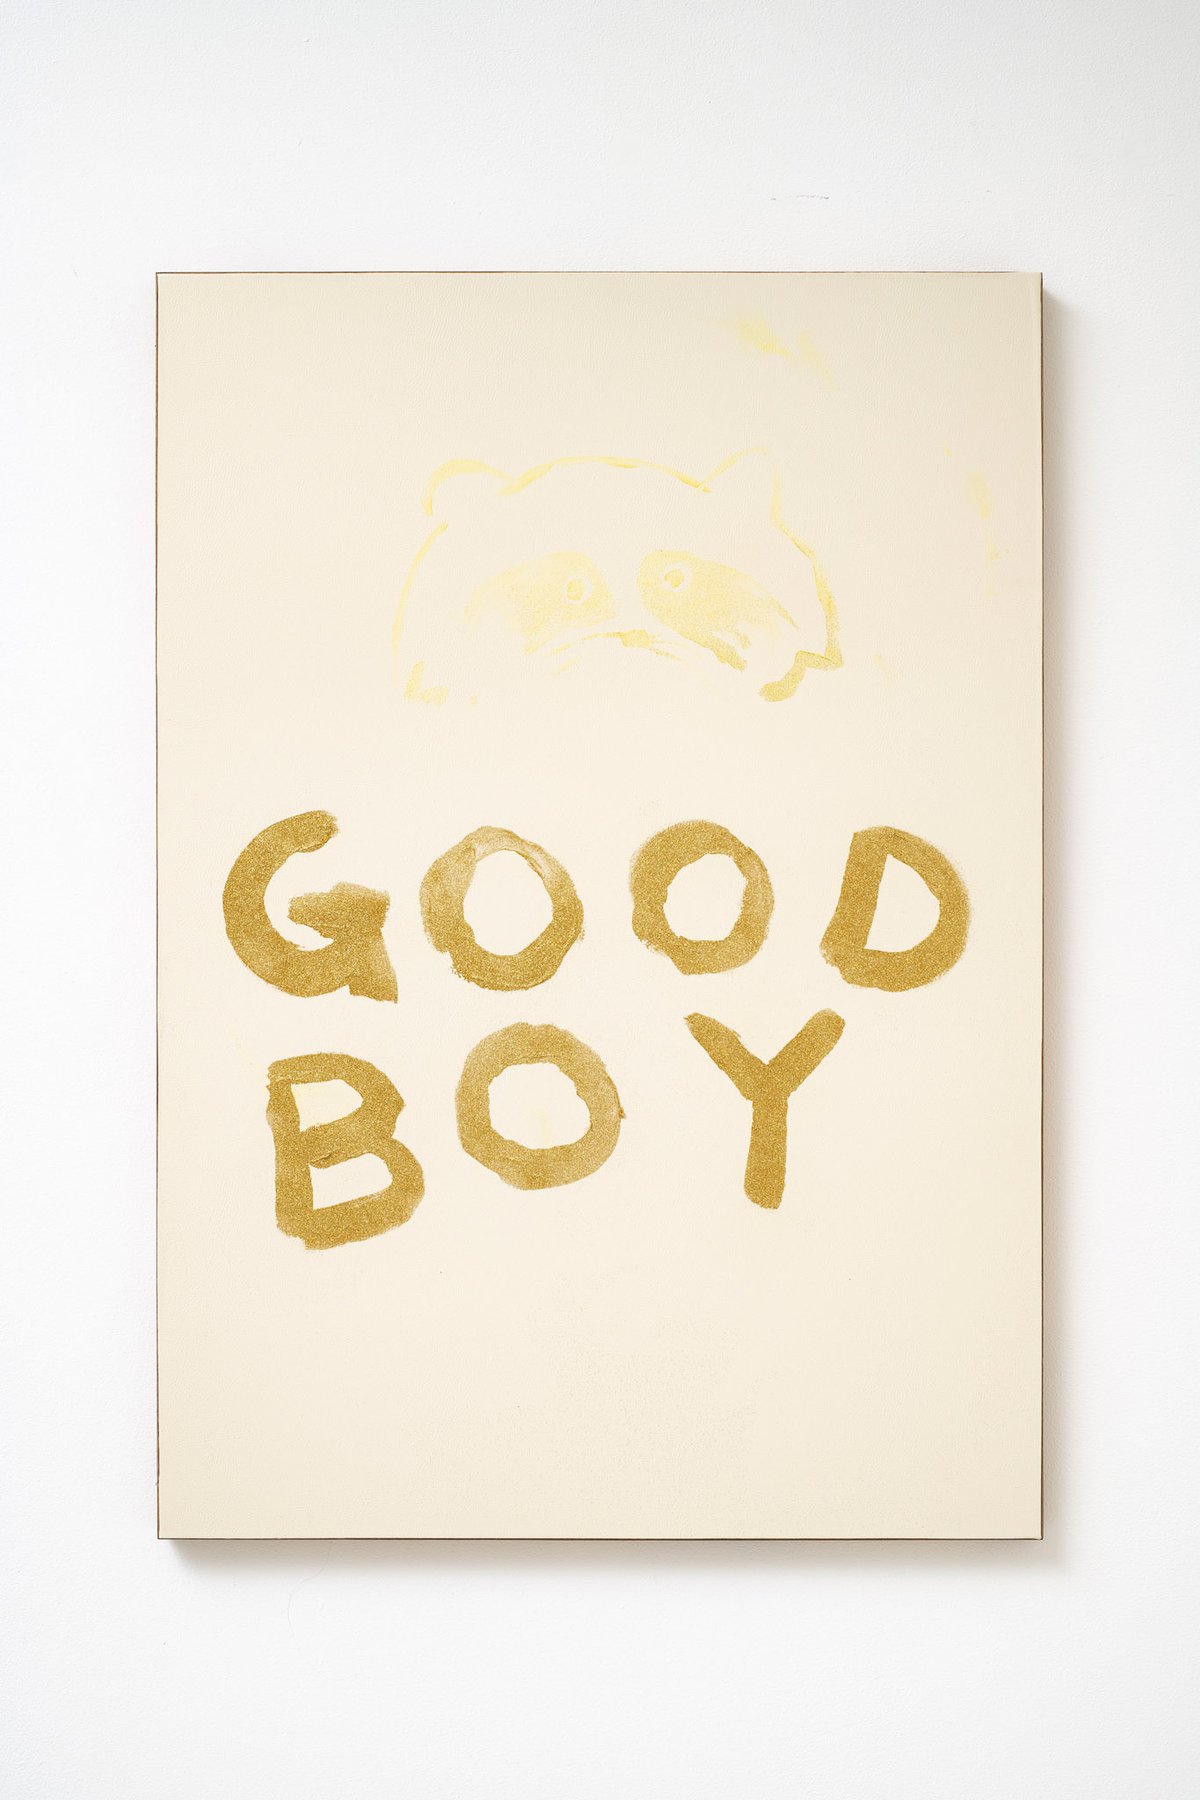 Philipp TimischlGOOD BOY (Beige, Royal, Gold), 2019Pleather on wooden board, oil, glitter100 x 70 x 4 cm